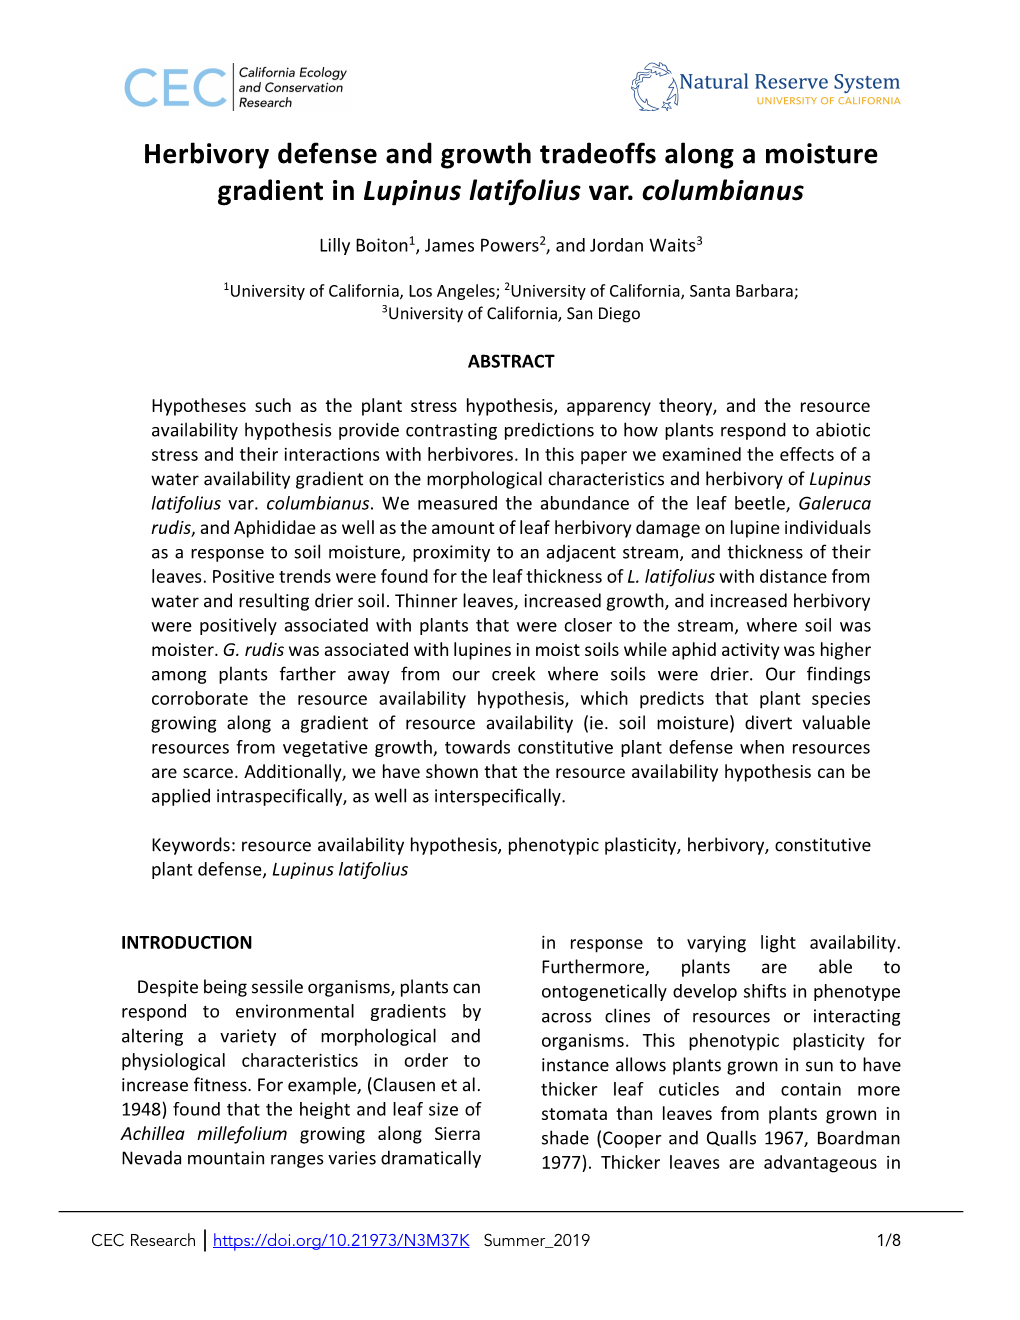 Herbivory Defense and Growth Tradeoffs Along a Moisture Gradient in Lupinus Latifolius Var